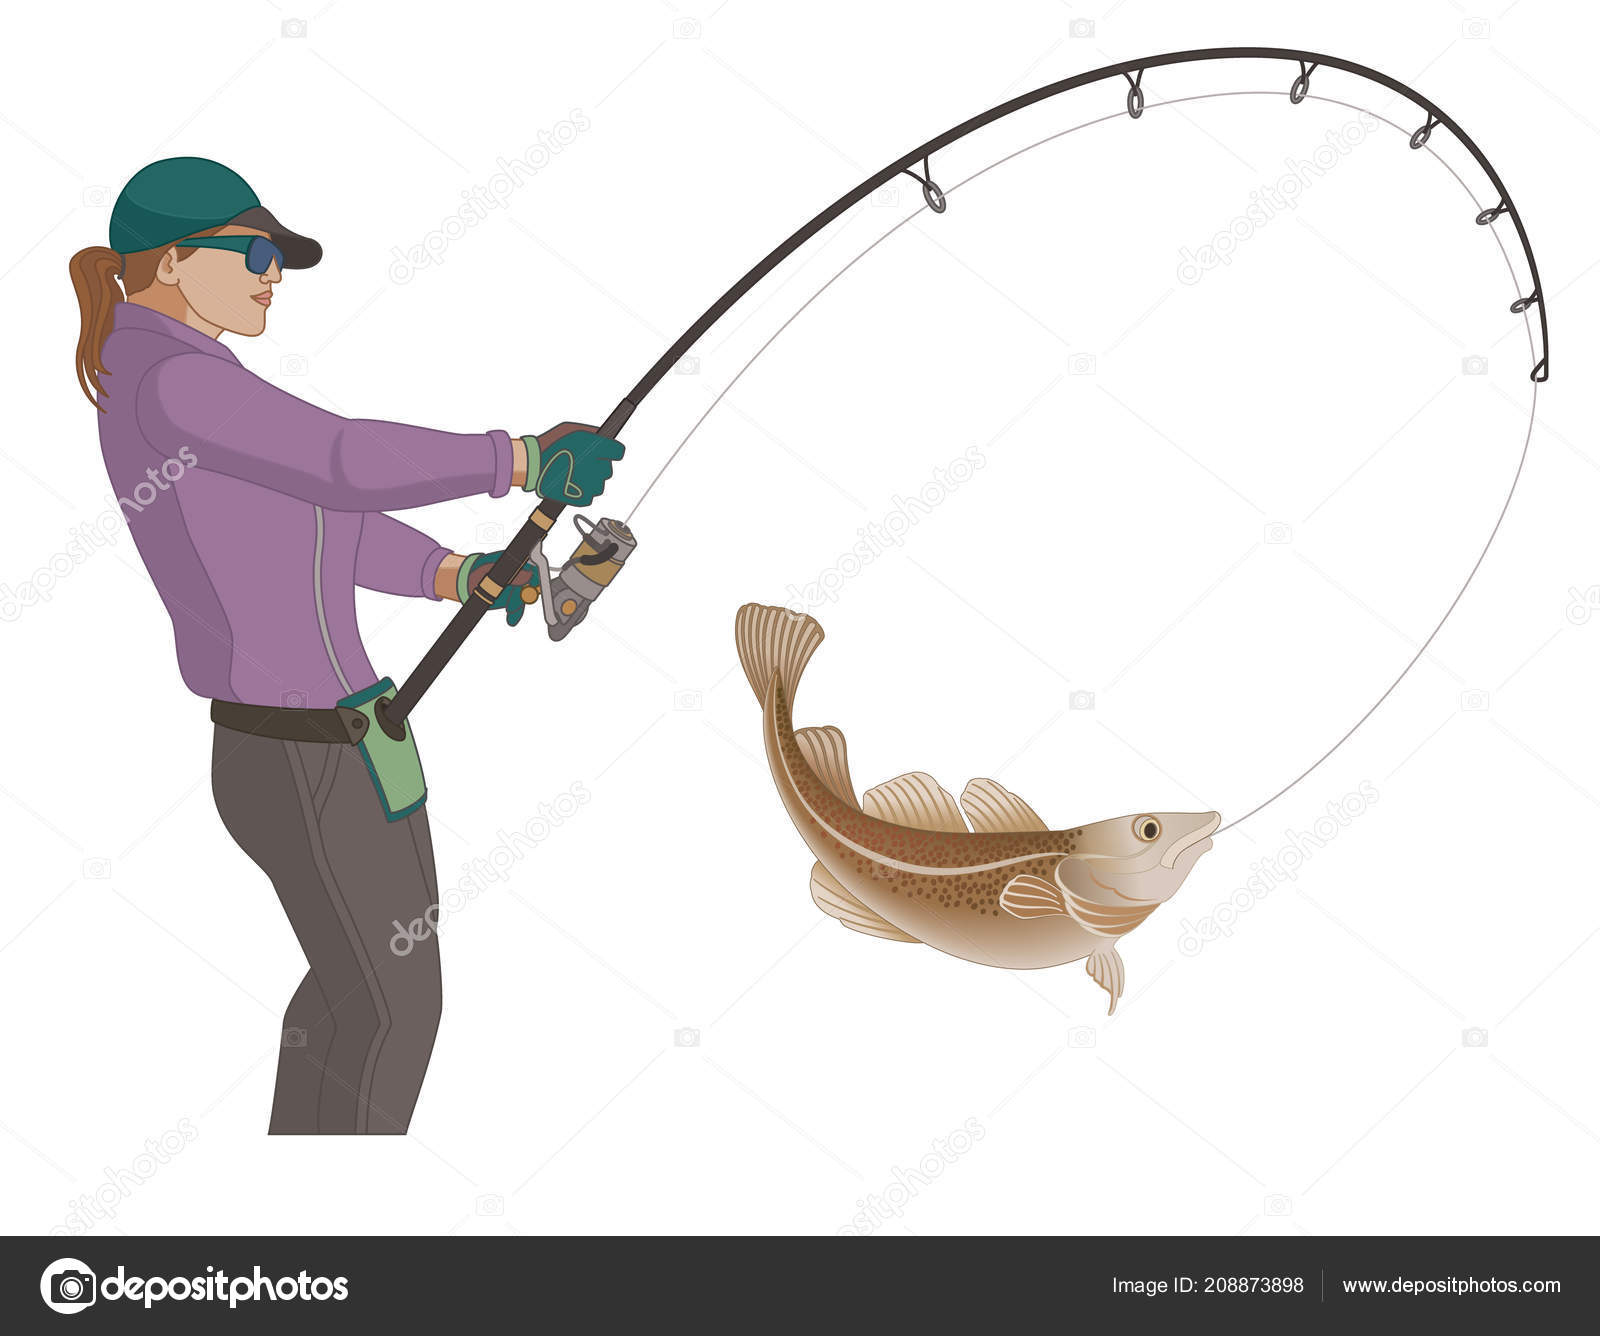 Angling Fishing Fisher Woman Catching Fish Using Fishing Pole Lure